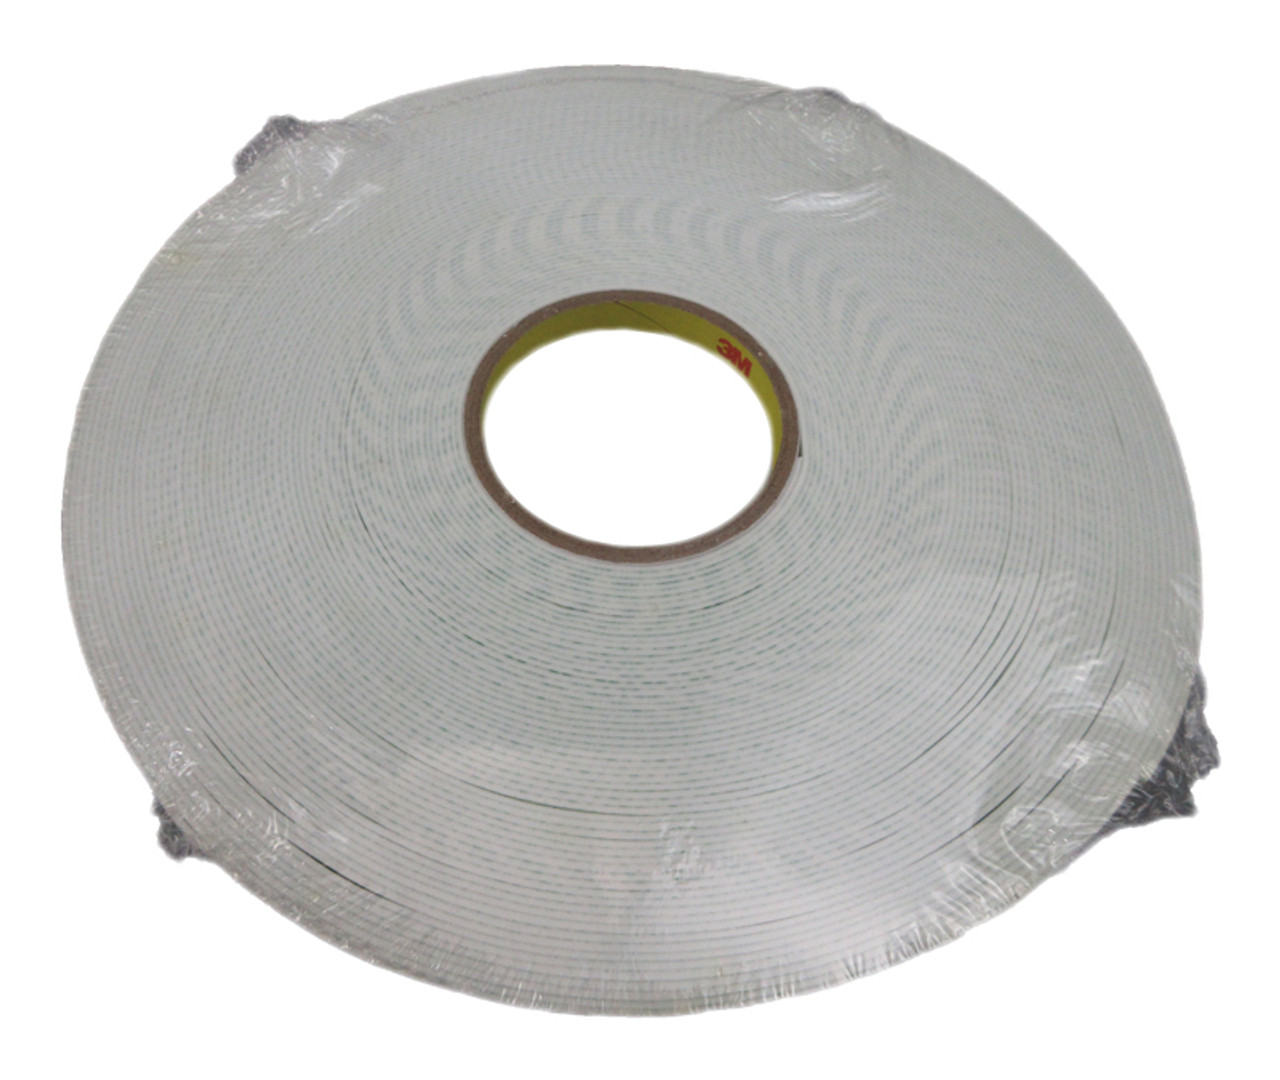 3M 4016 Double Sided Urethane Foam Tape (2 Inch Roll)